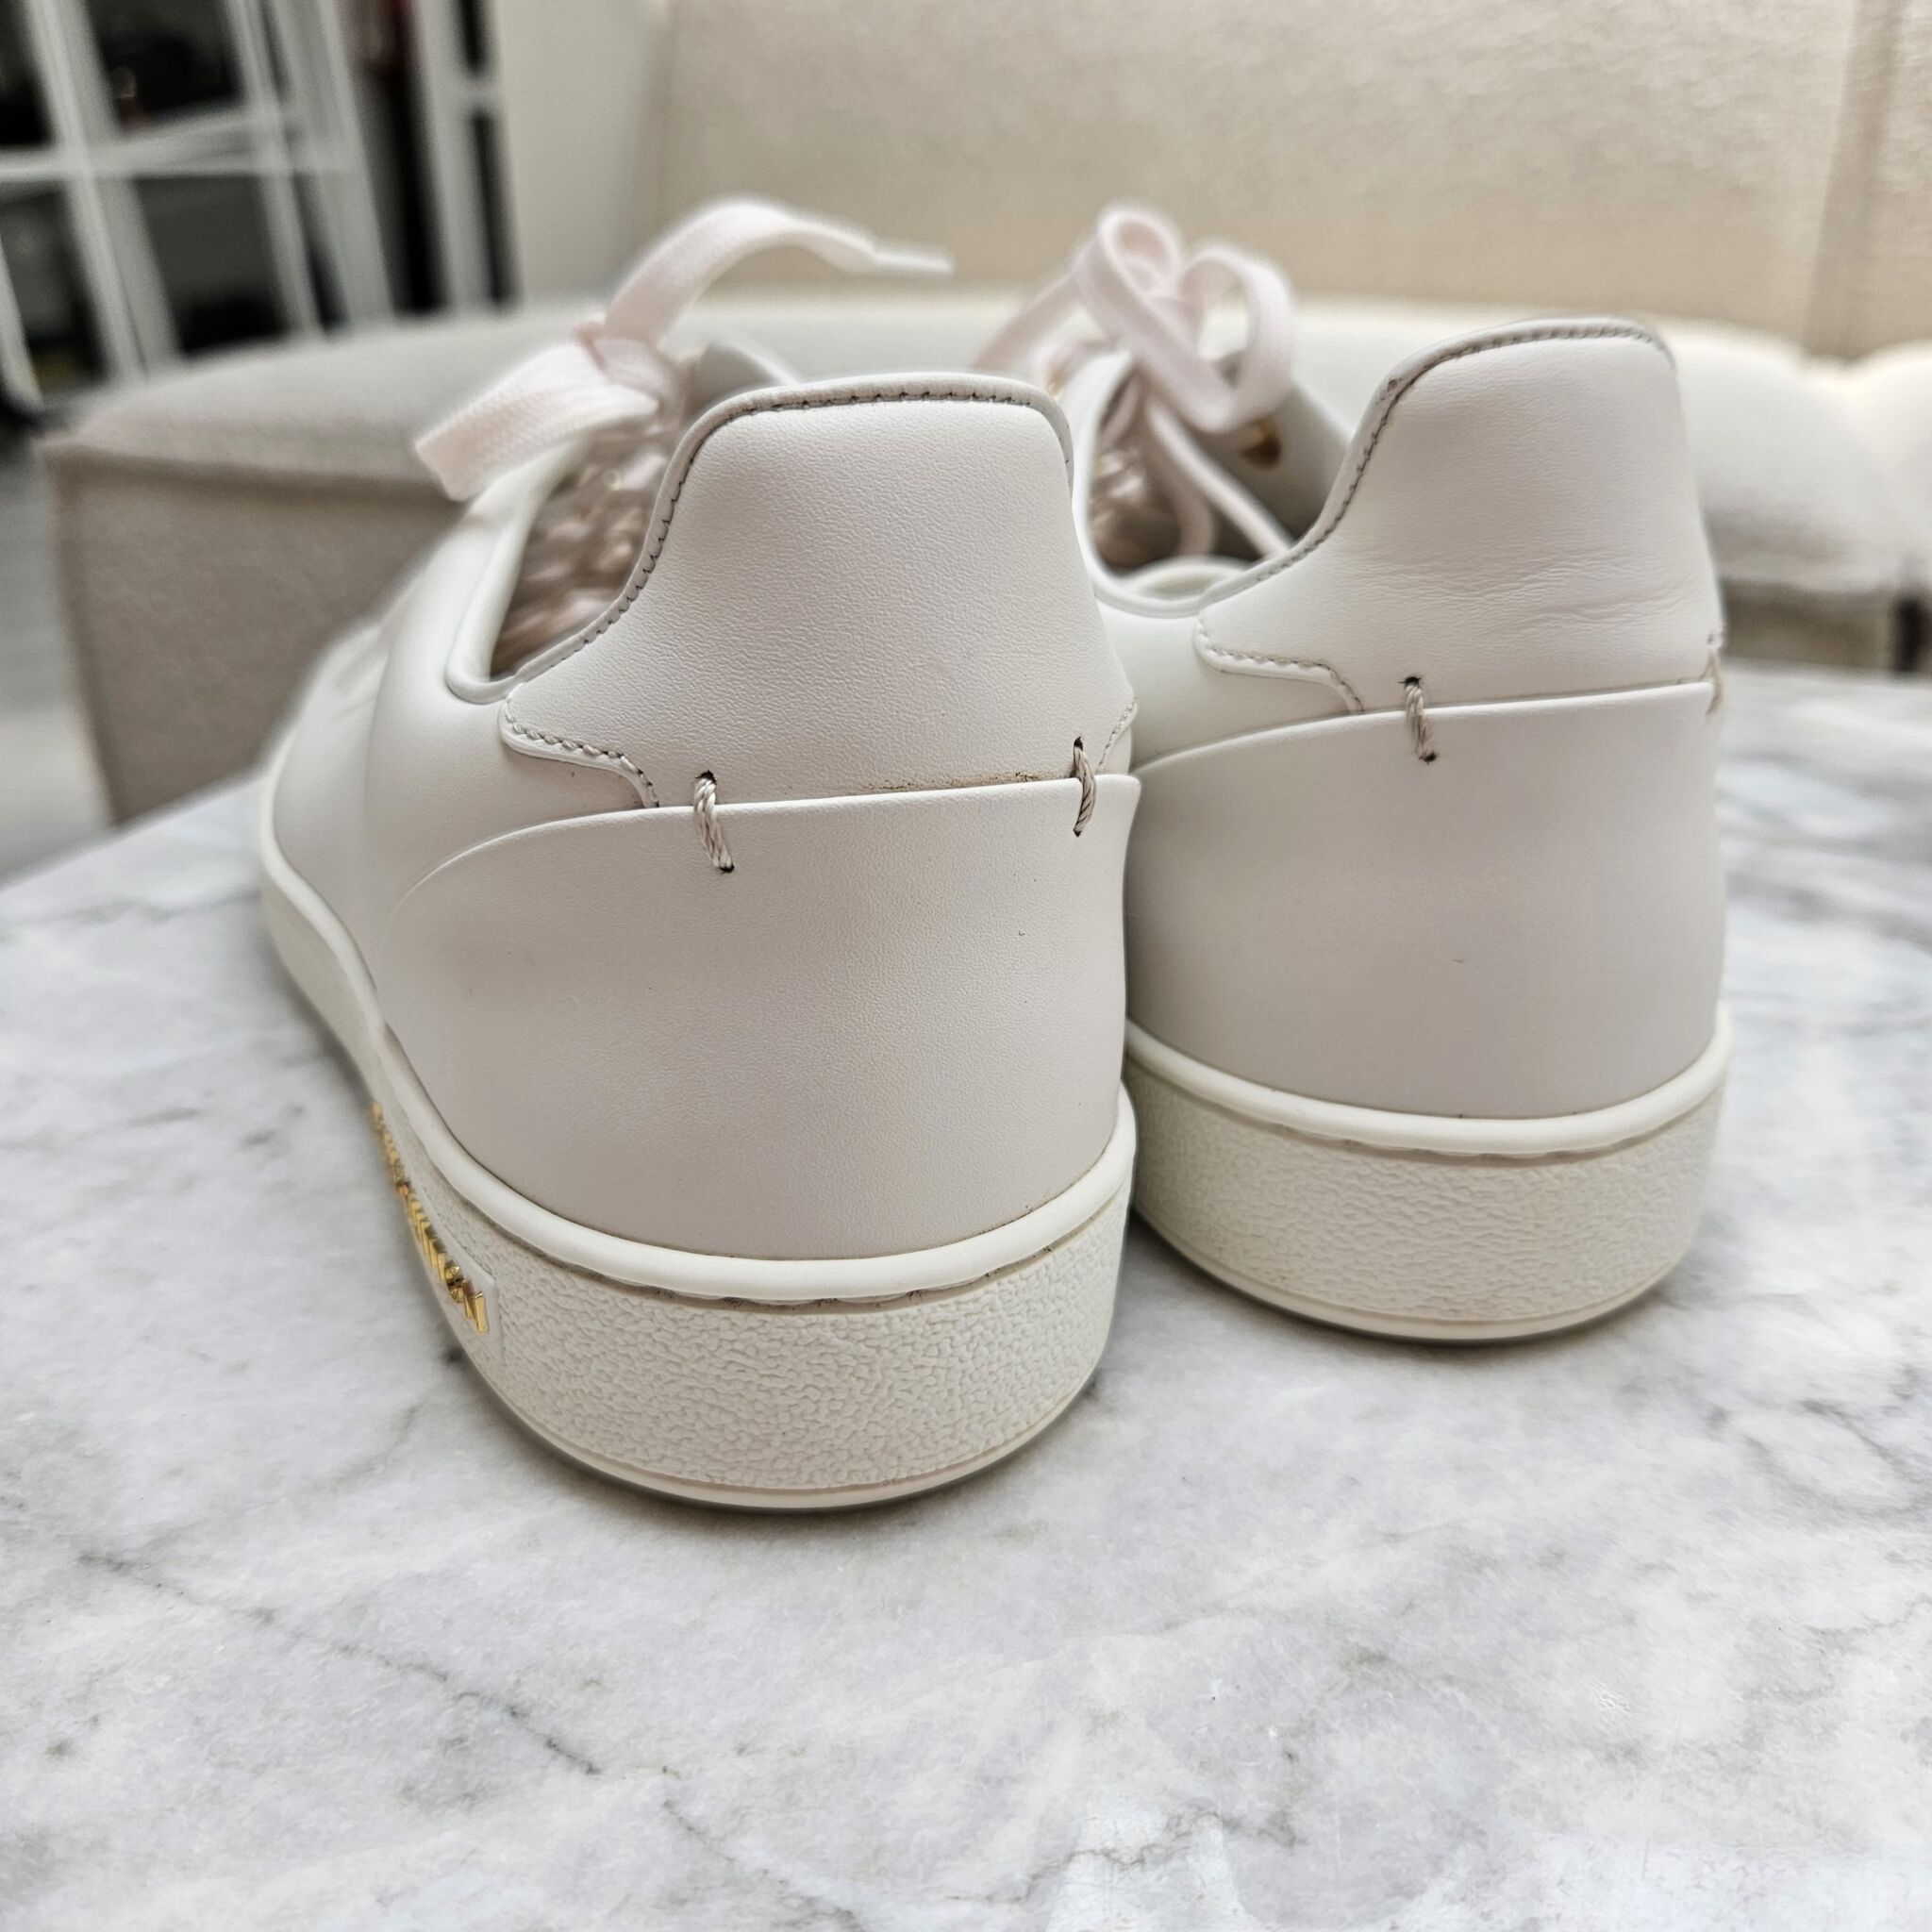 Louis Vuitton White Leather FRONTROW Sneakers Size 38